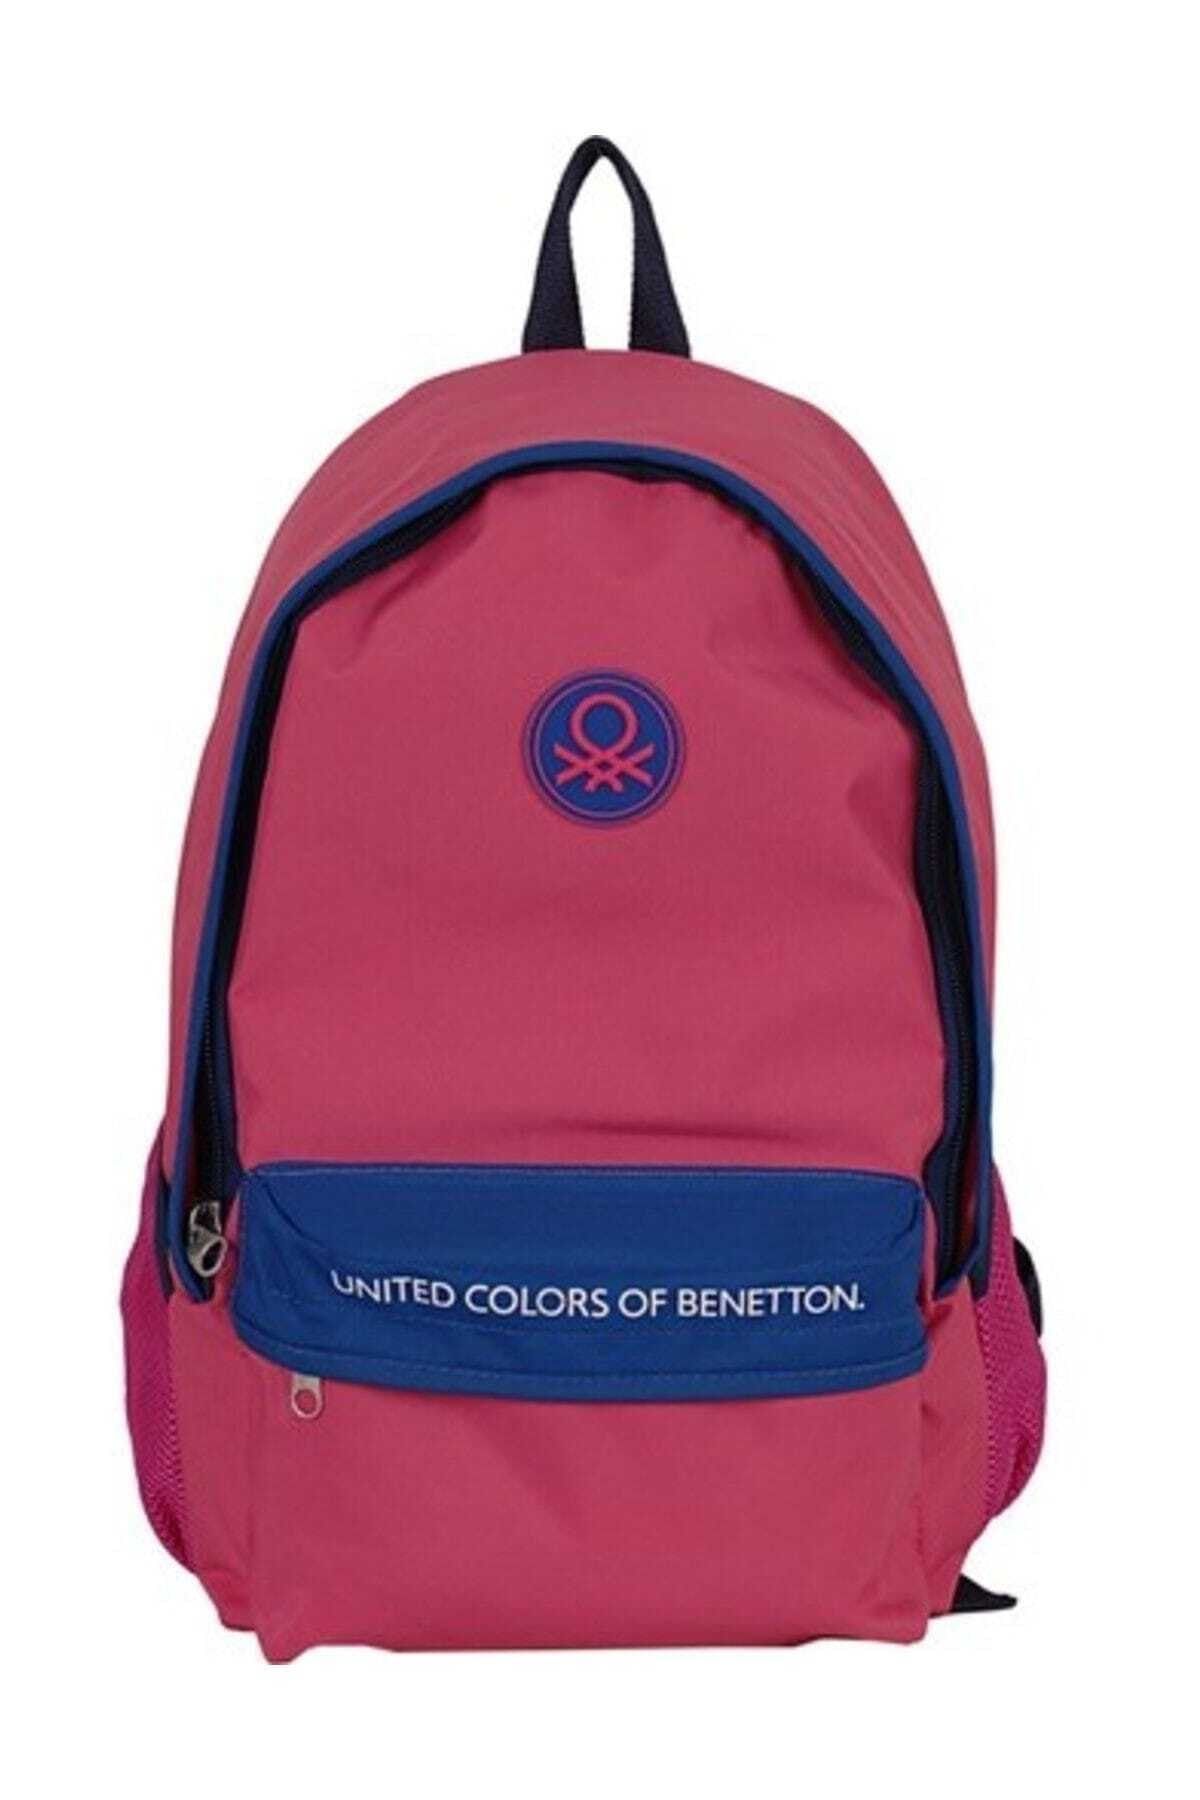 Benetton United Colors Of 96065 Okul Çantası Pembe - Lacivert